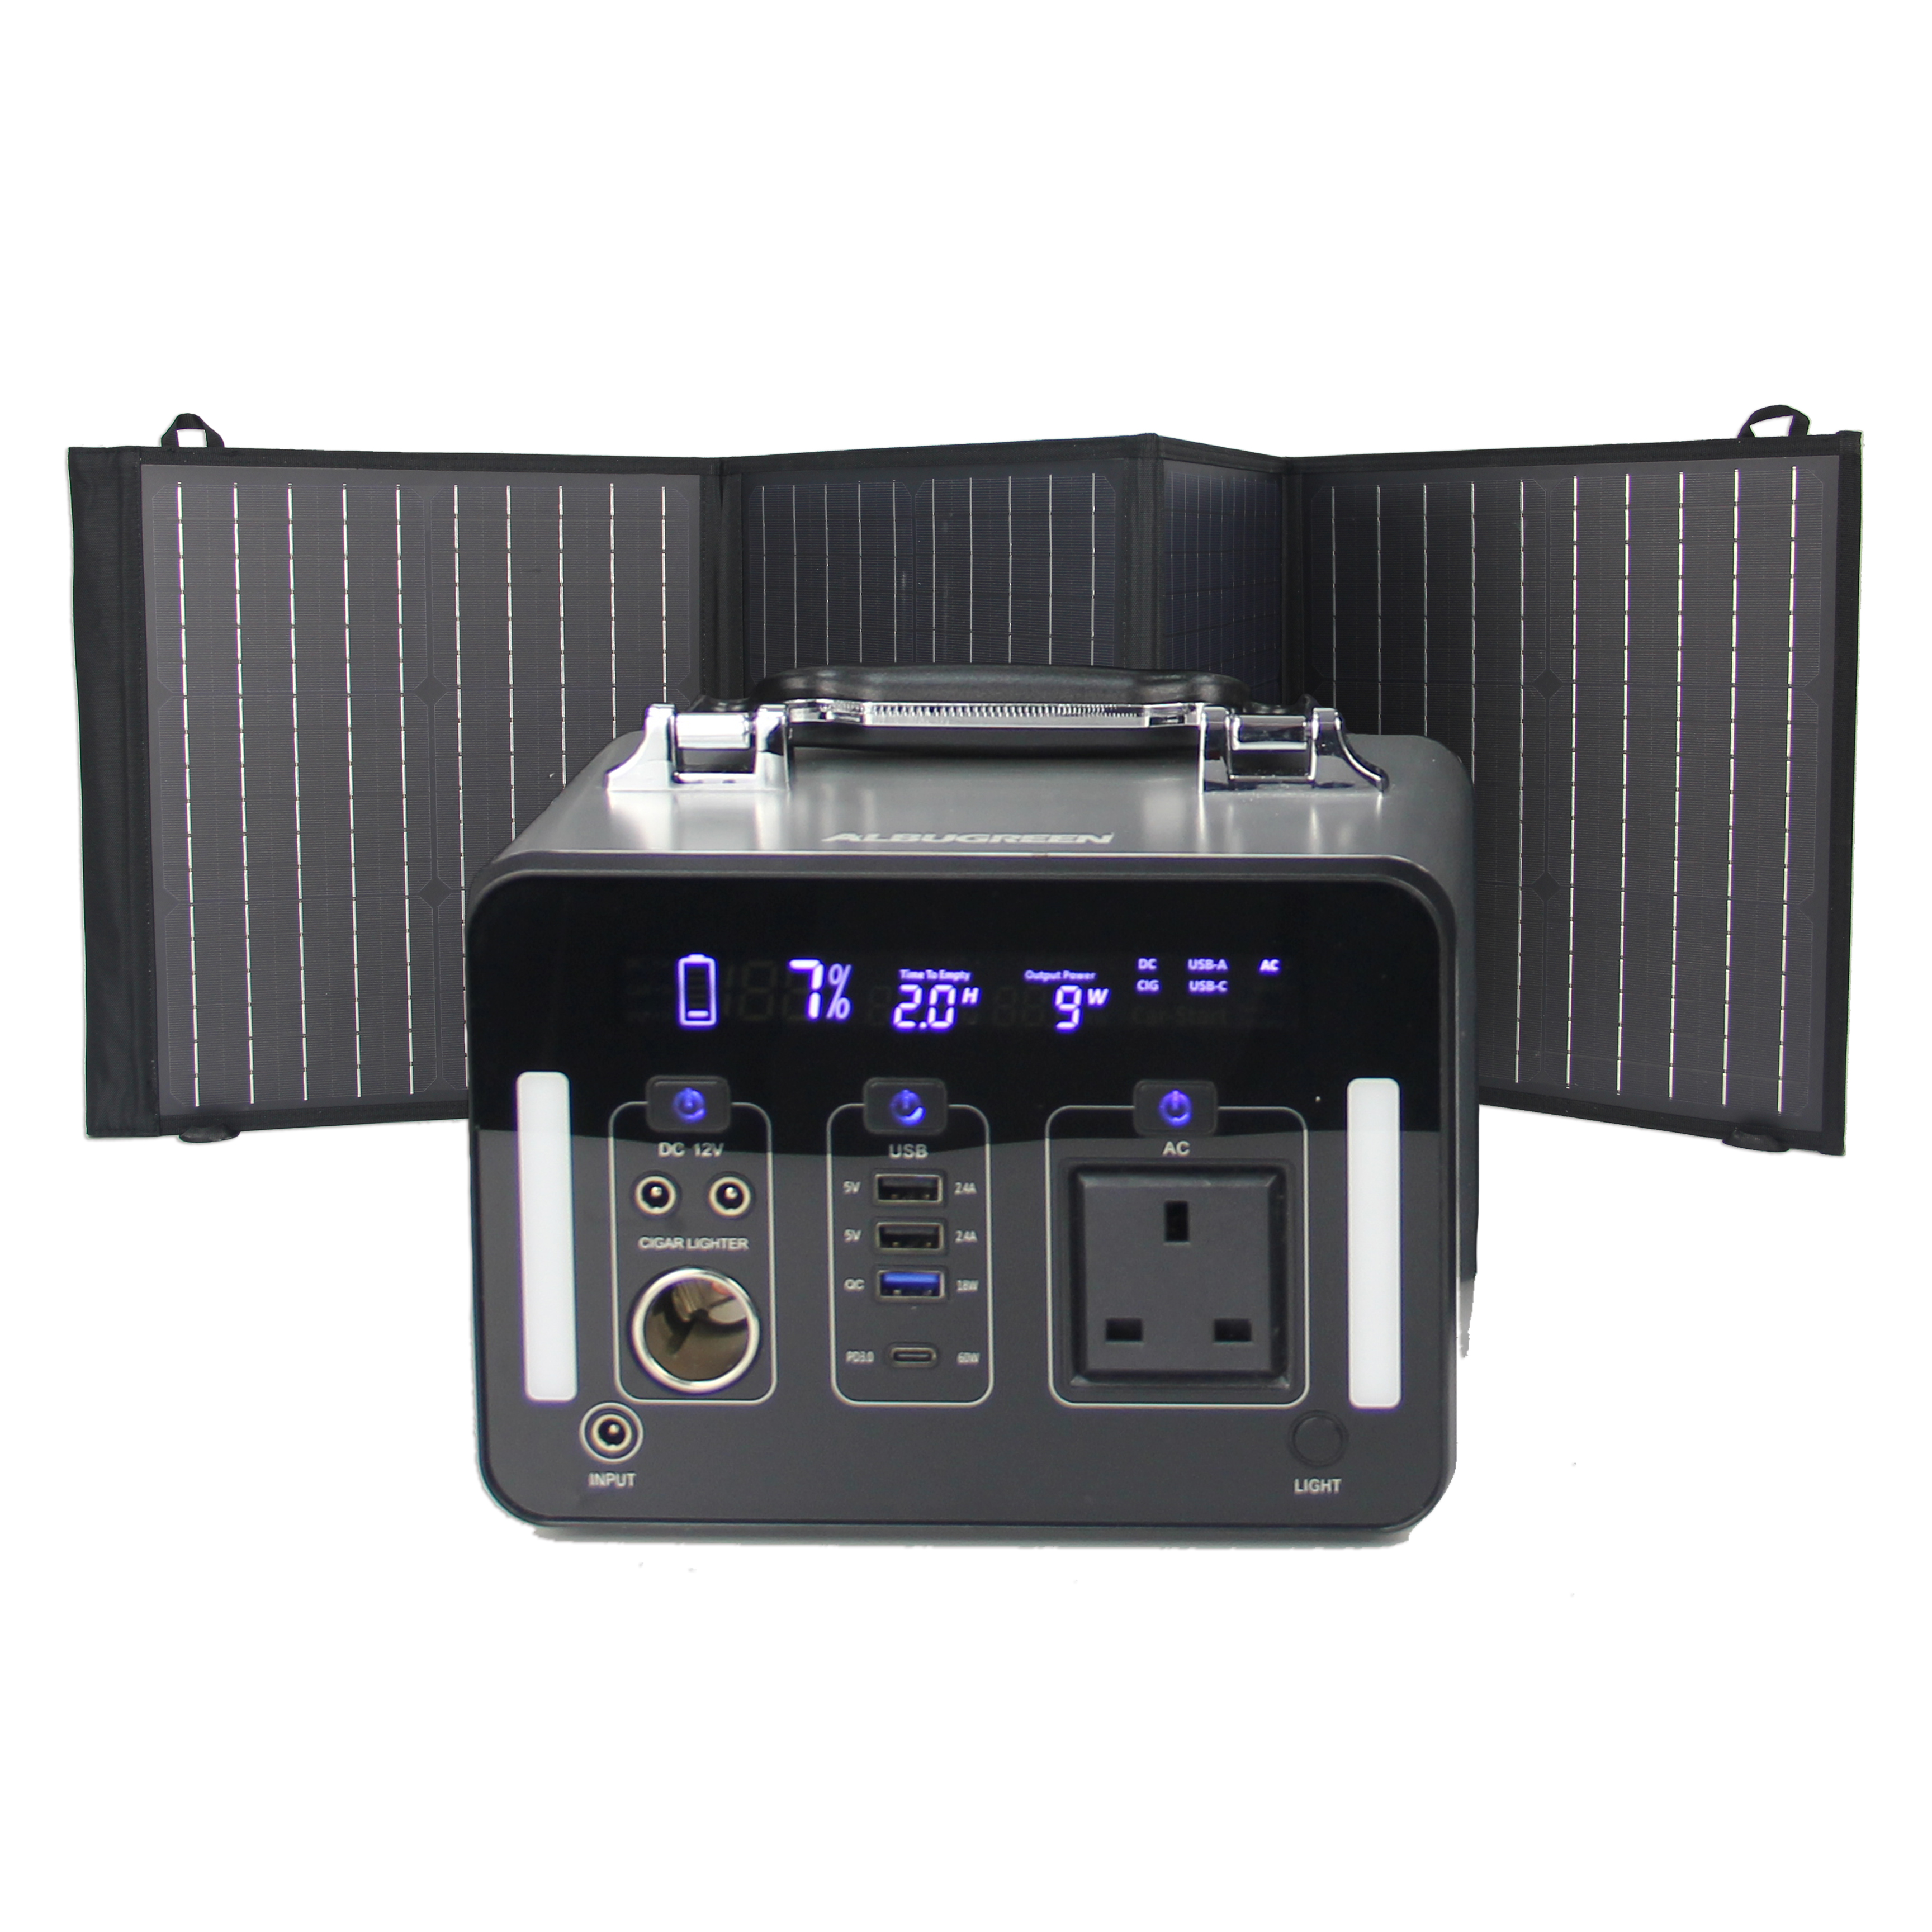 500w 220v High Capacity Portable Backup Station for Vehicle